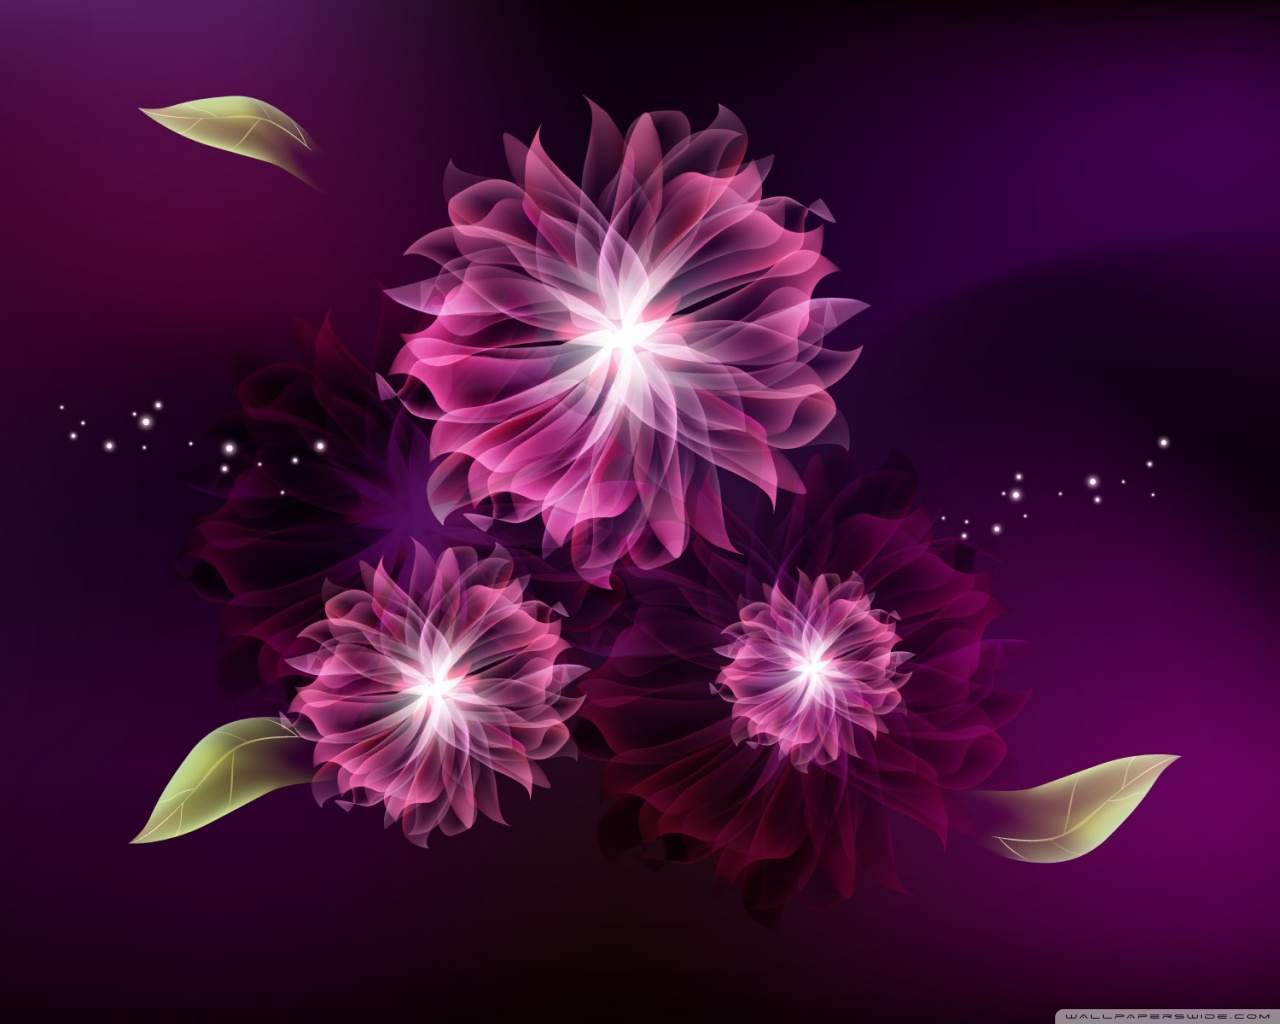 Abstract Flowers Ultra HD Desktop Background Wallpaper for 4K UHD TV :  Widescreen & UltraWide Desktop & Laptop